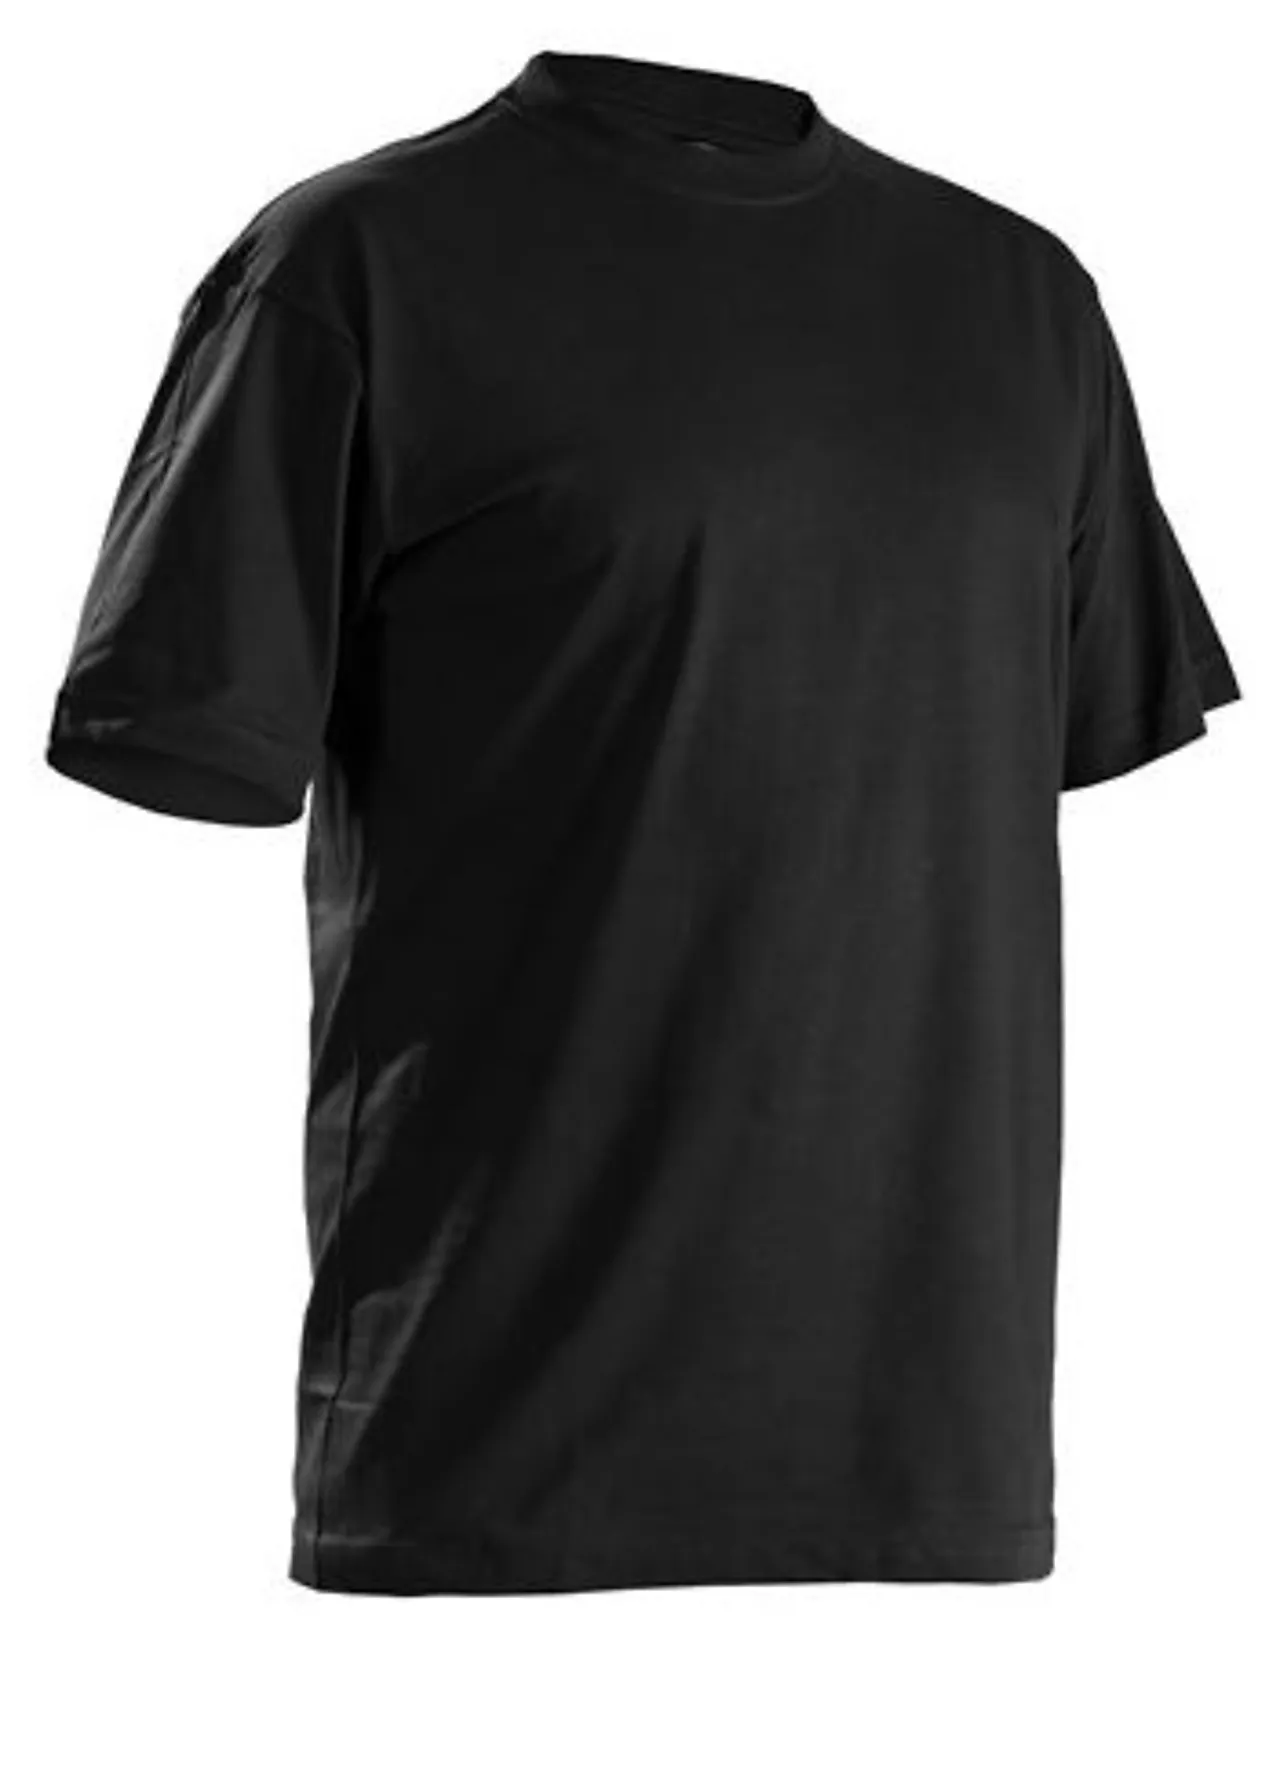 T-skjorte 5 pakk 3325104299004xl 5 pakk svart null - null - 2 - Miniatyr